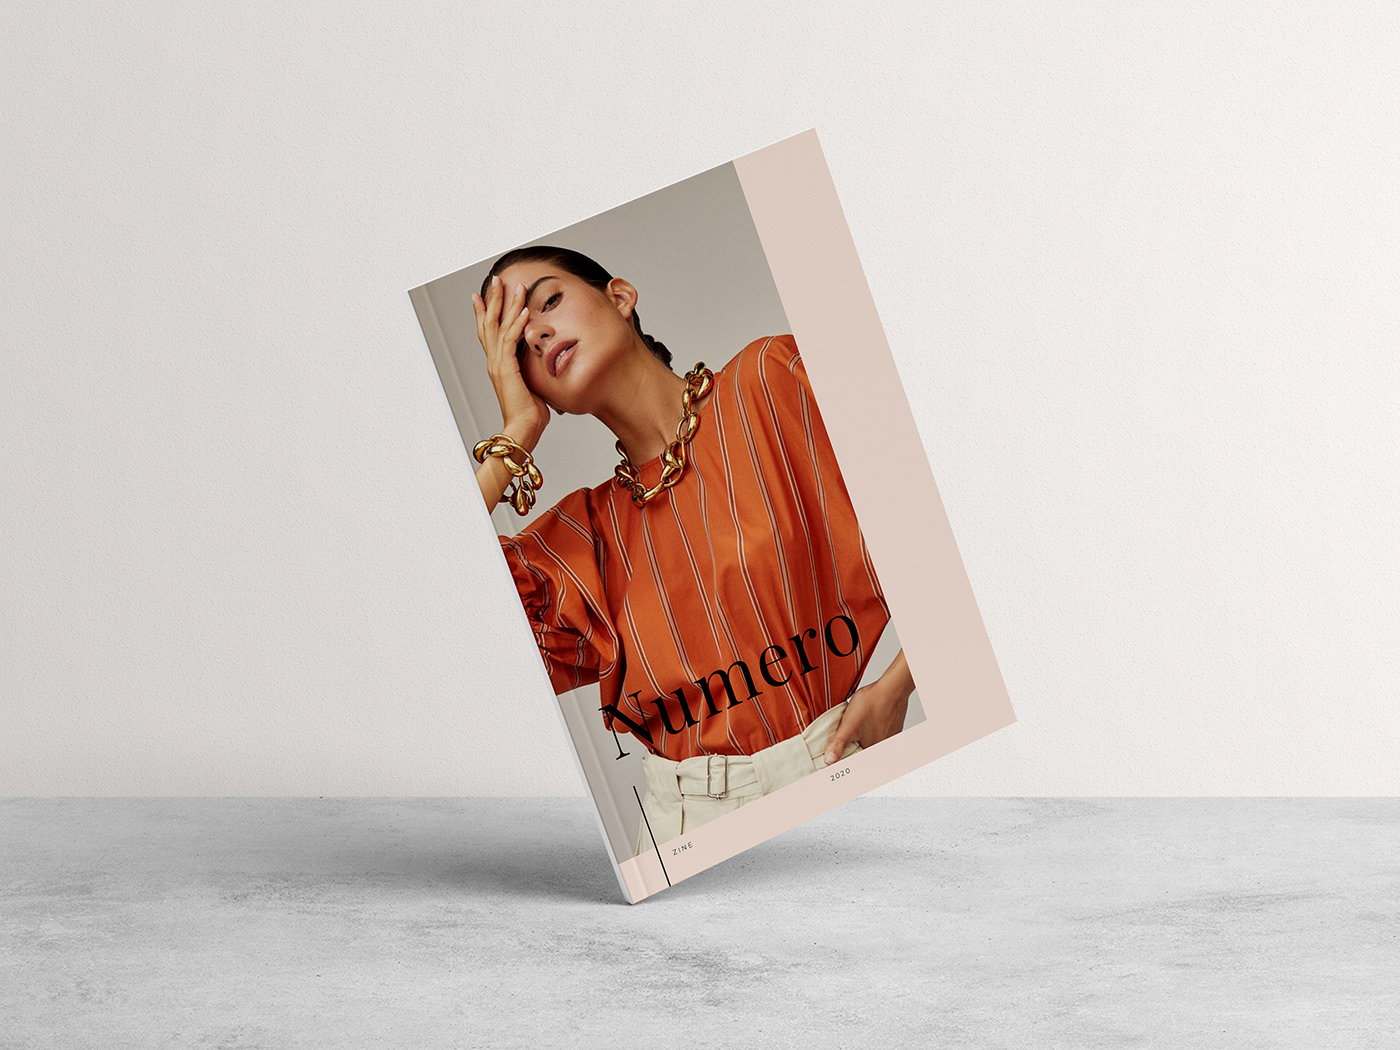 editorial InDesign Layout magazine minimal personal portfolio print showcase template